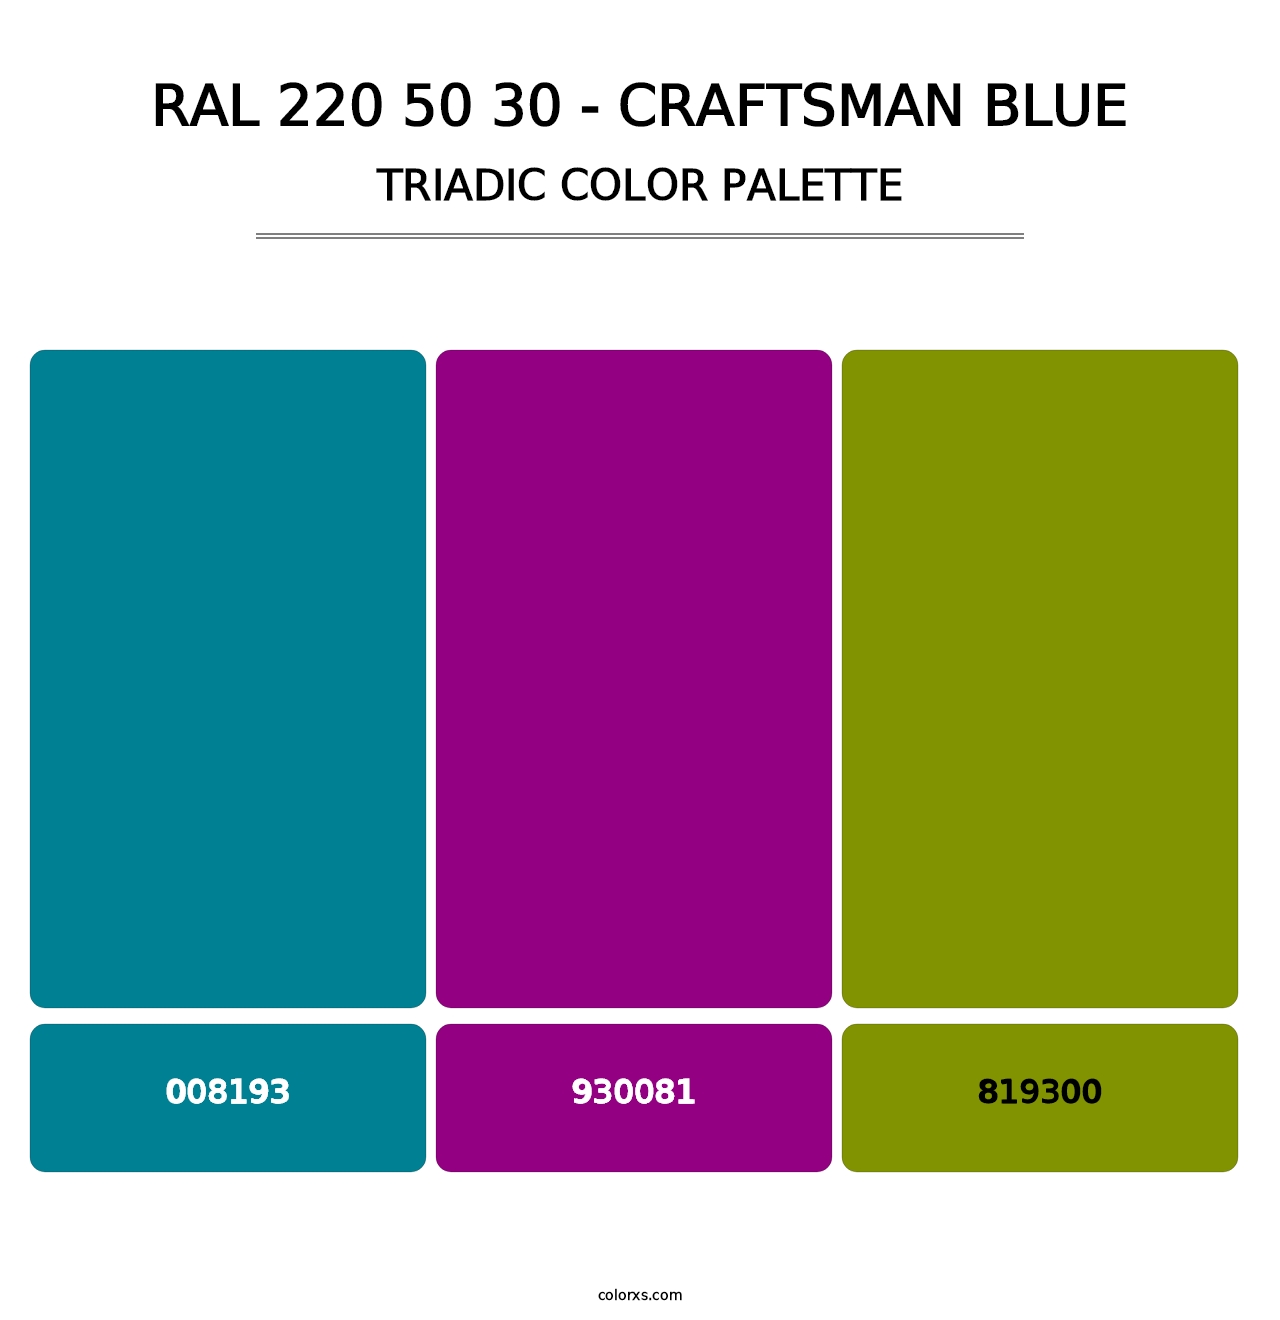 RAL 220 50 30 - Craftsman Blue - Triadic Color Palette